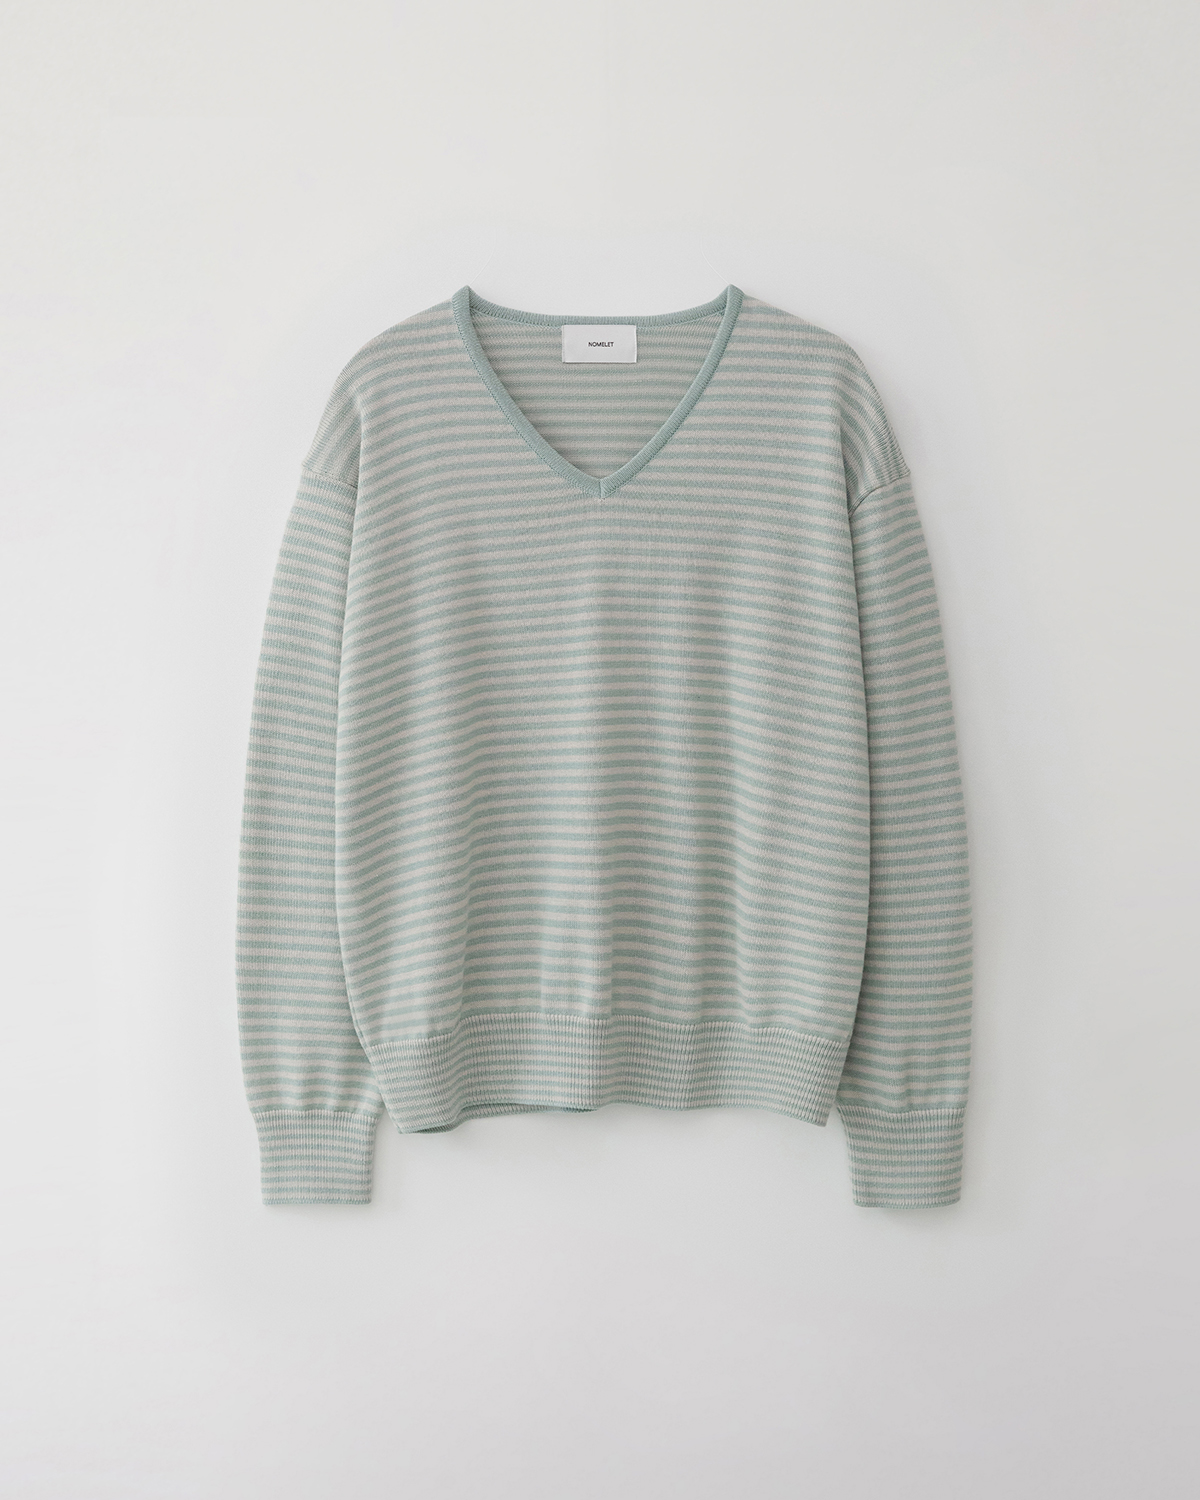 Blanche v-neck stripe knit - sky gray